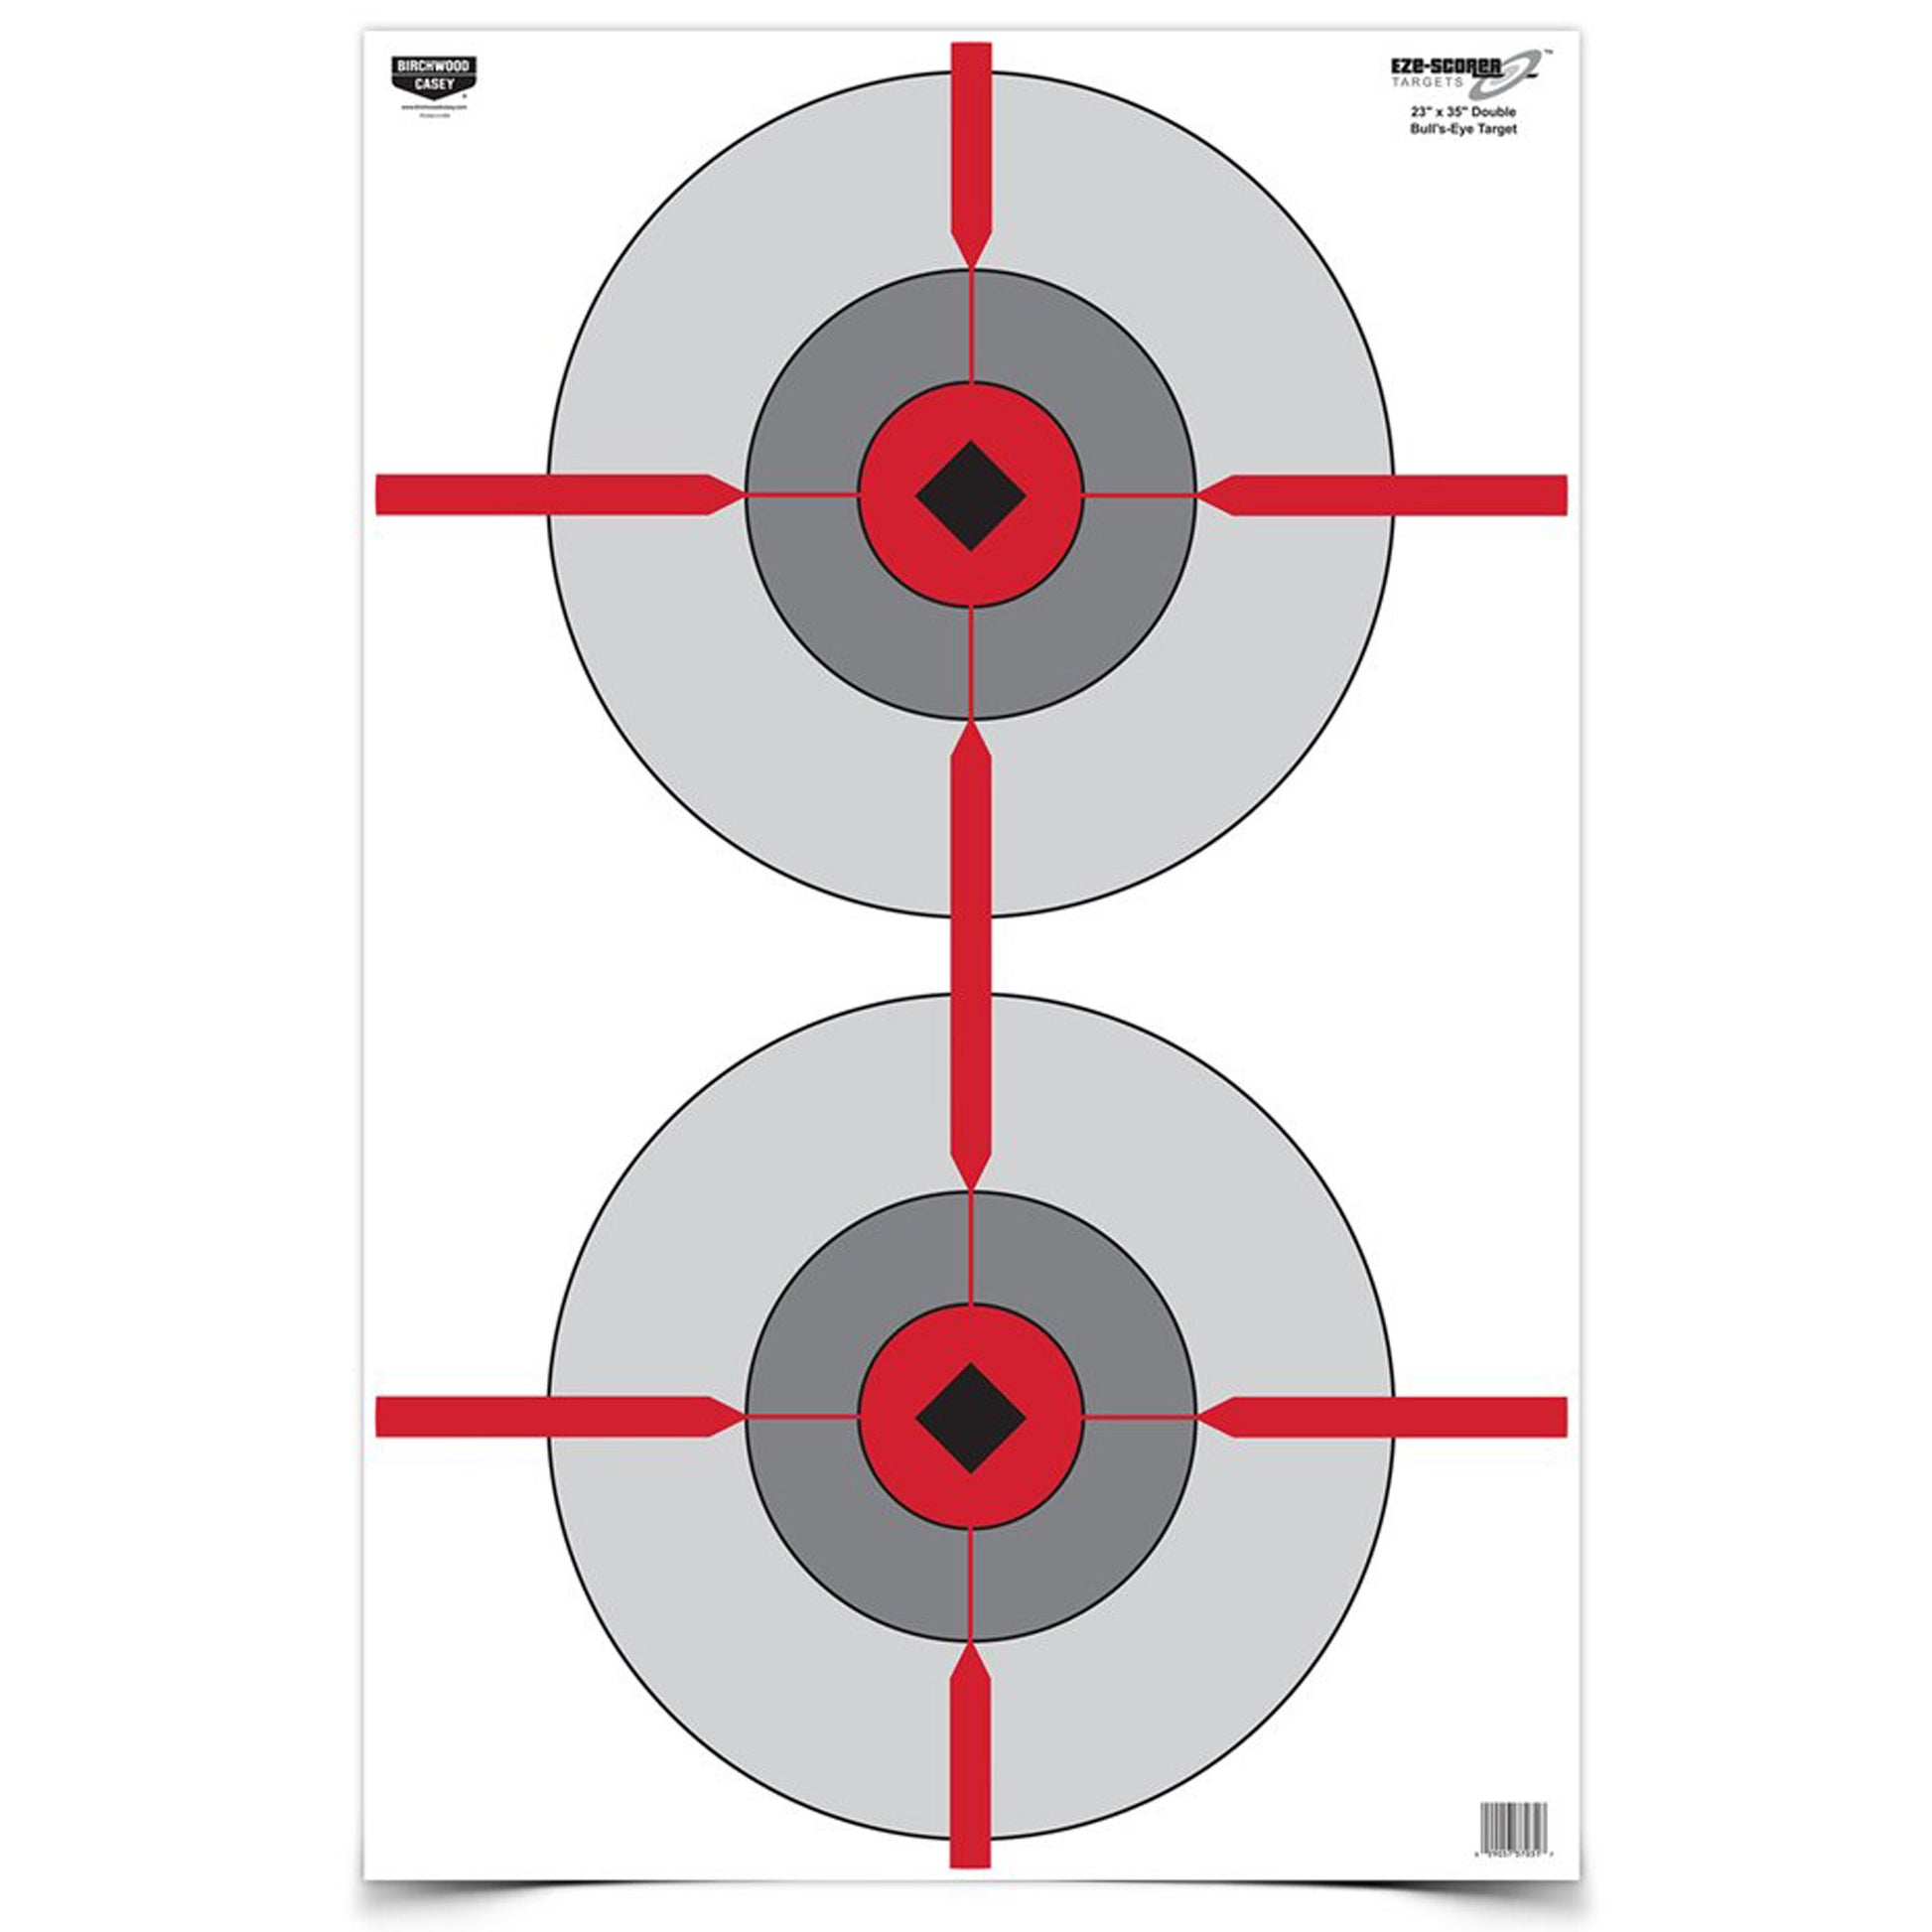 Birchwood Casey Eze-Scorer Target Double Bulls-eye 23x35 100 Targets BC-37031 - California Shooting Supplies